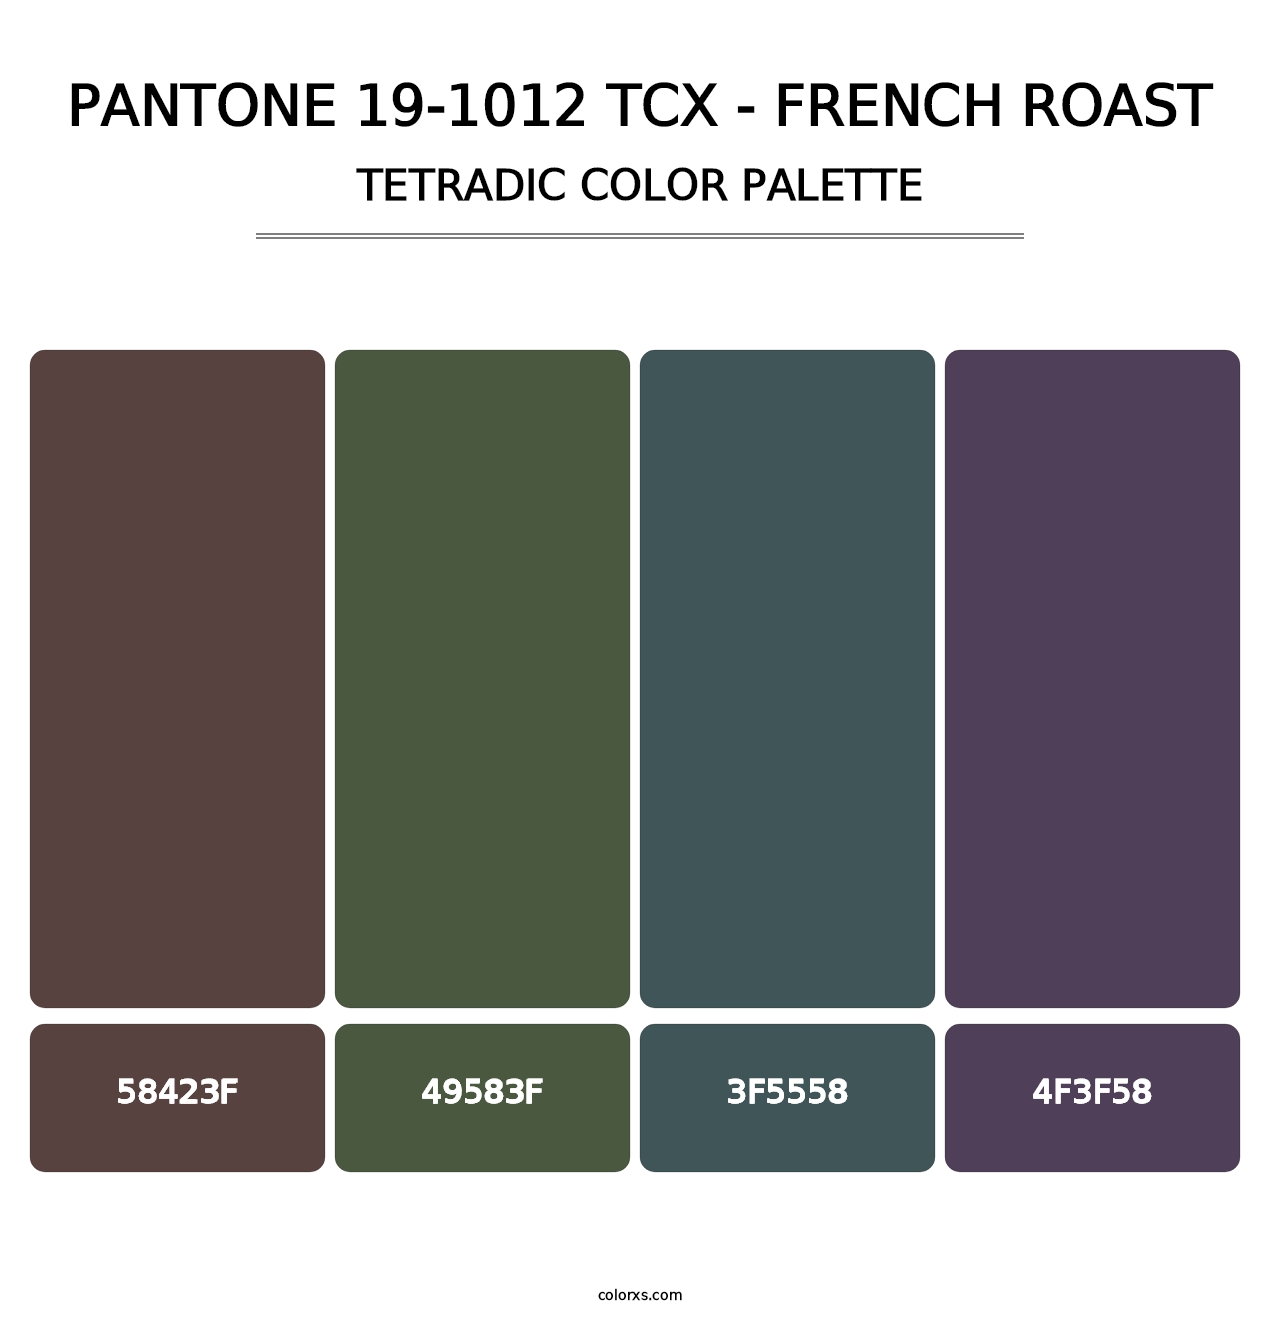 PANTONE 19-1012 TCX - French Roast - Tetradic Color Palette